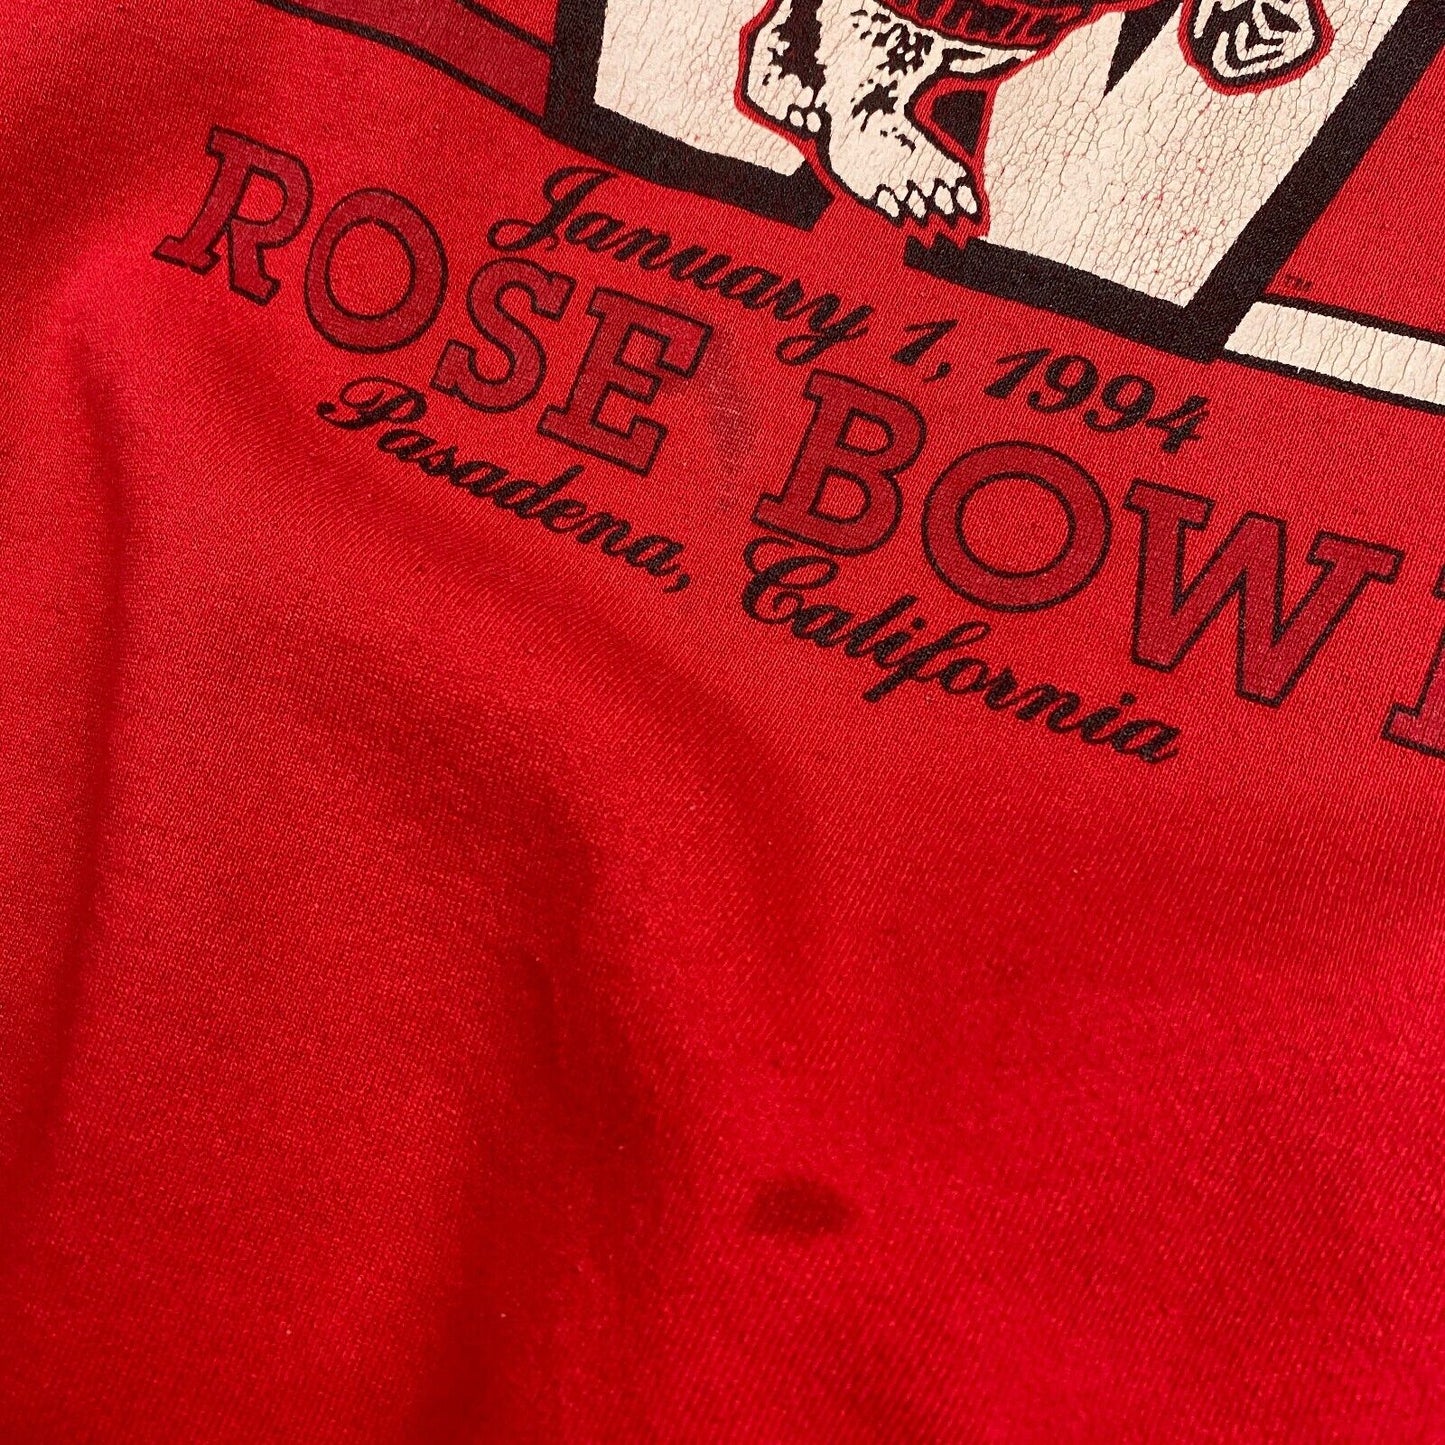 VINTAGE 90s Wisconsin Badgers Rose Bowl Crewneck Sweater sz XL Adult Men